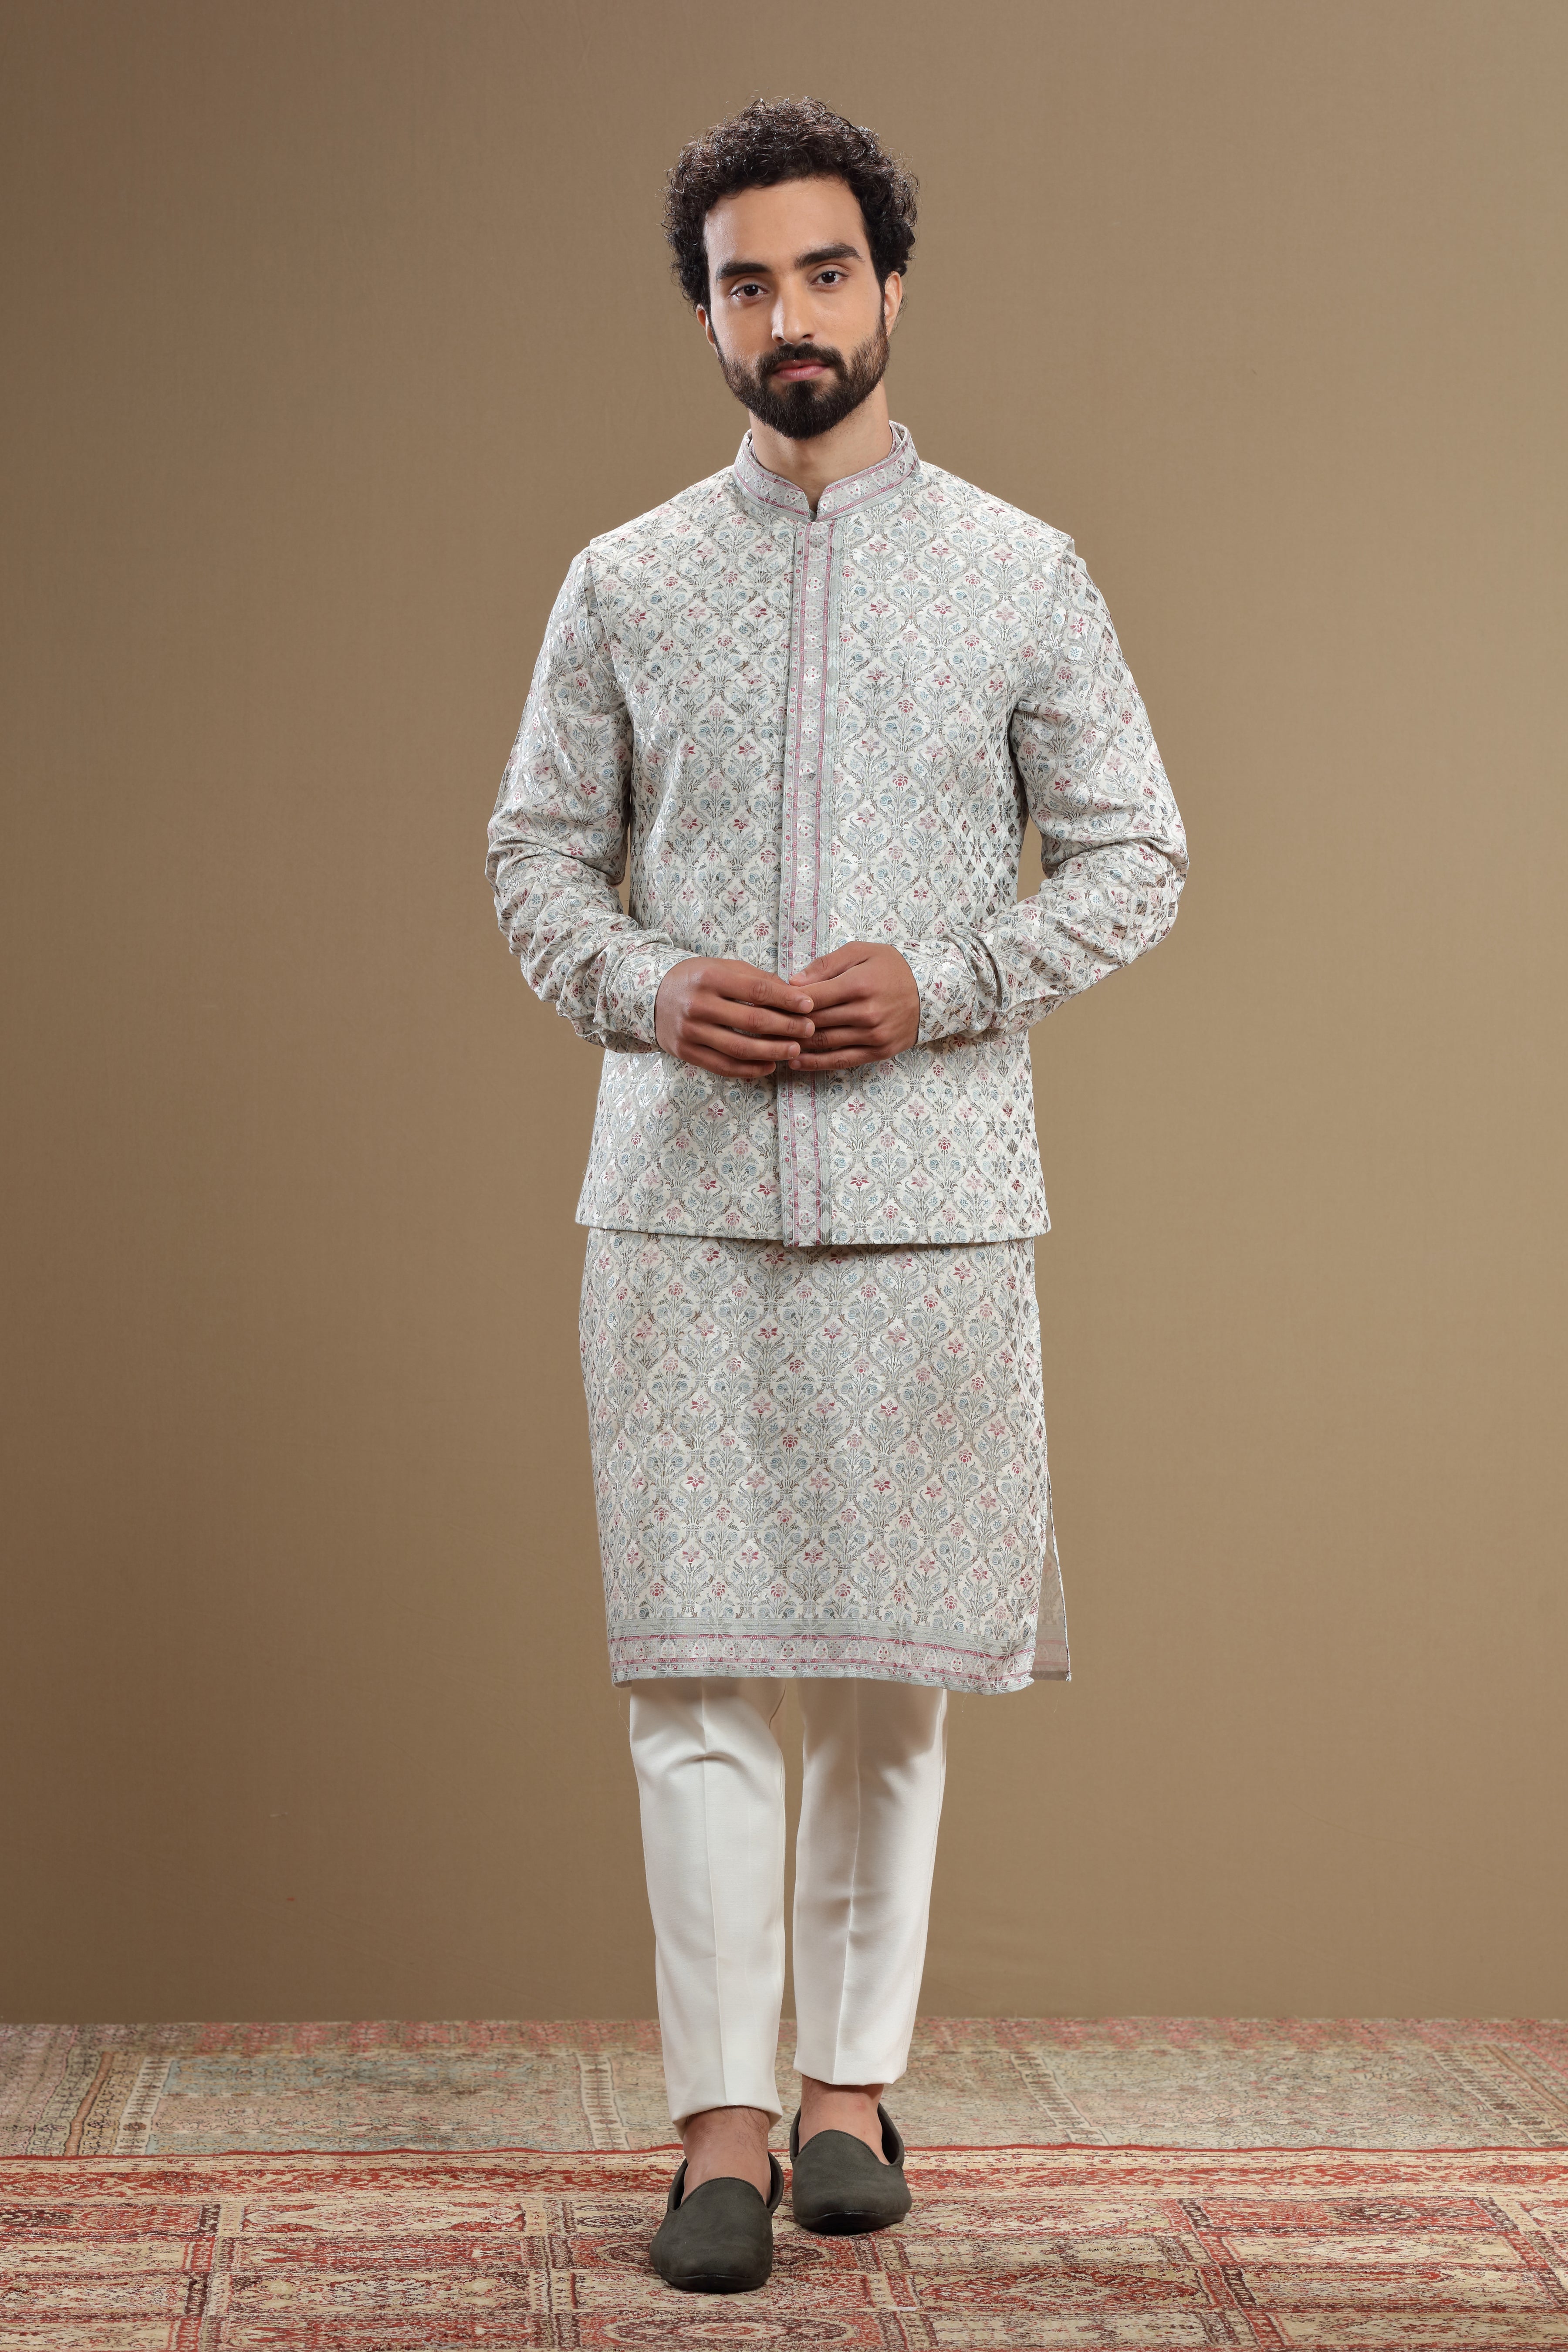 Off White Dupion Silk Kurta Pyjama Set with Cotton Print Jacket | Gents kurta  design, Men fashion casual shirts, Kurta designs men's